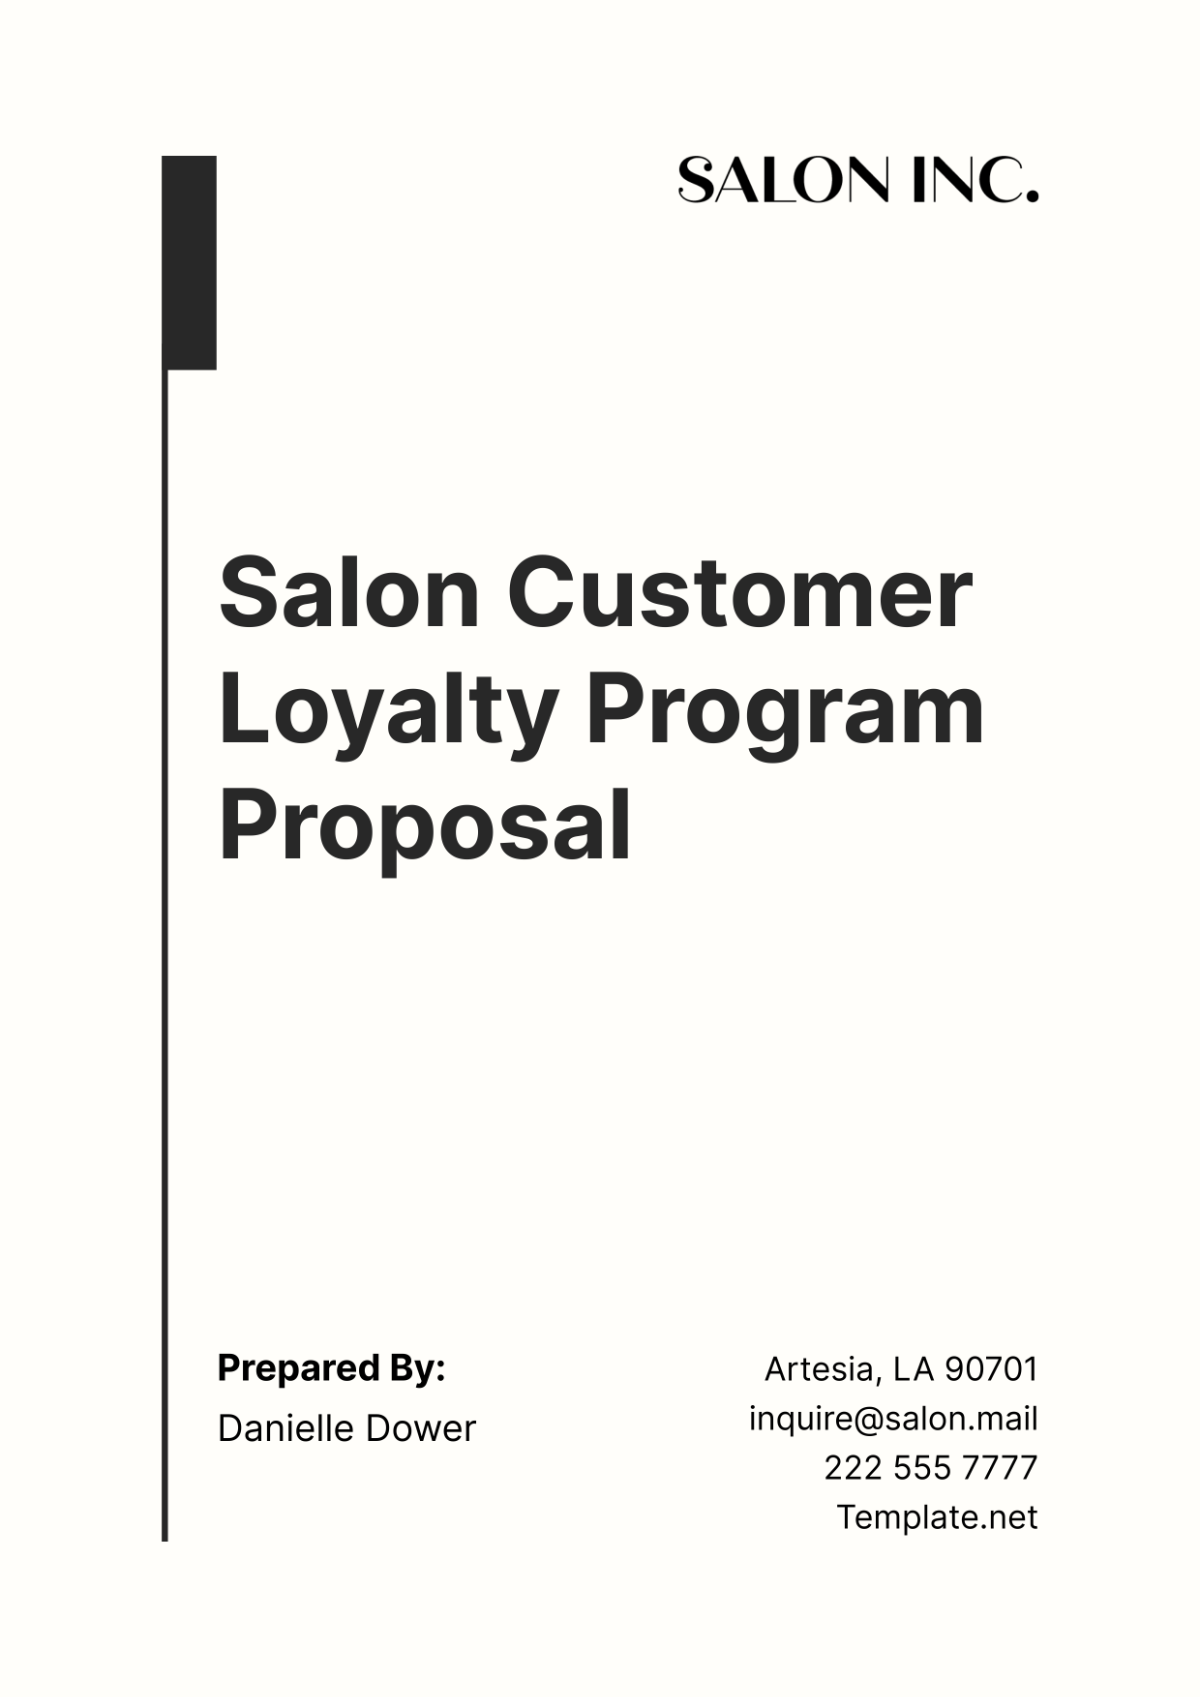 Salon Customer Loyalty Program Proposal Template